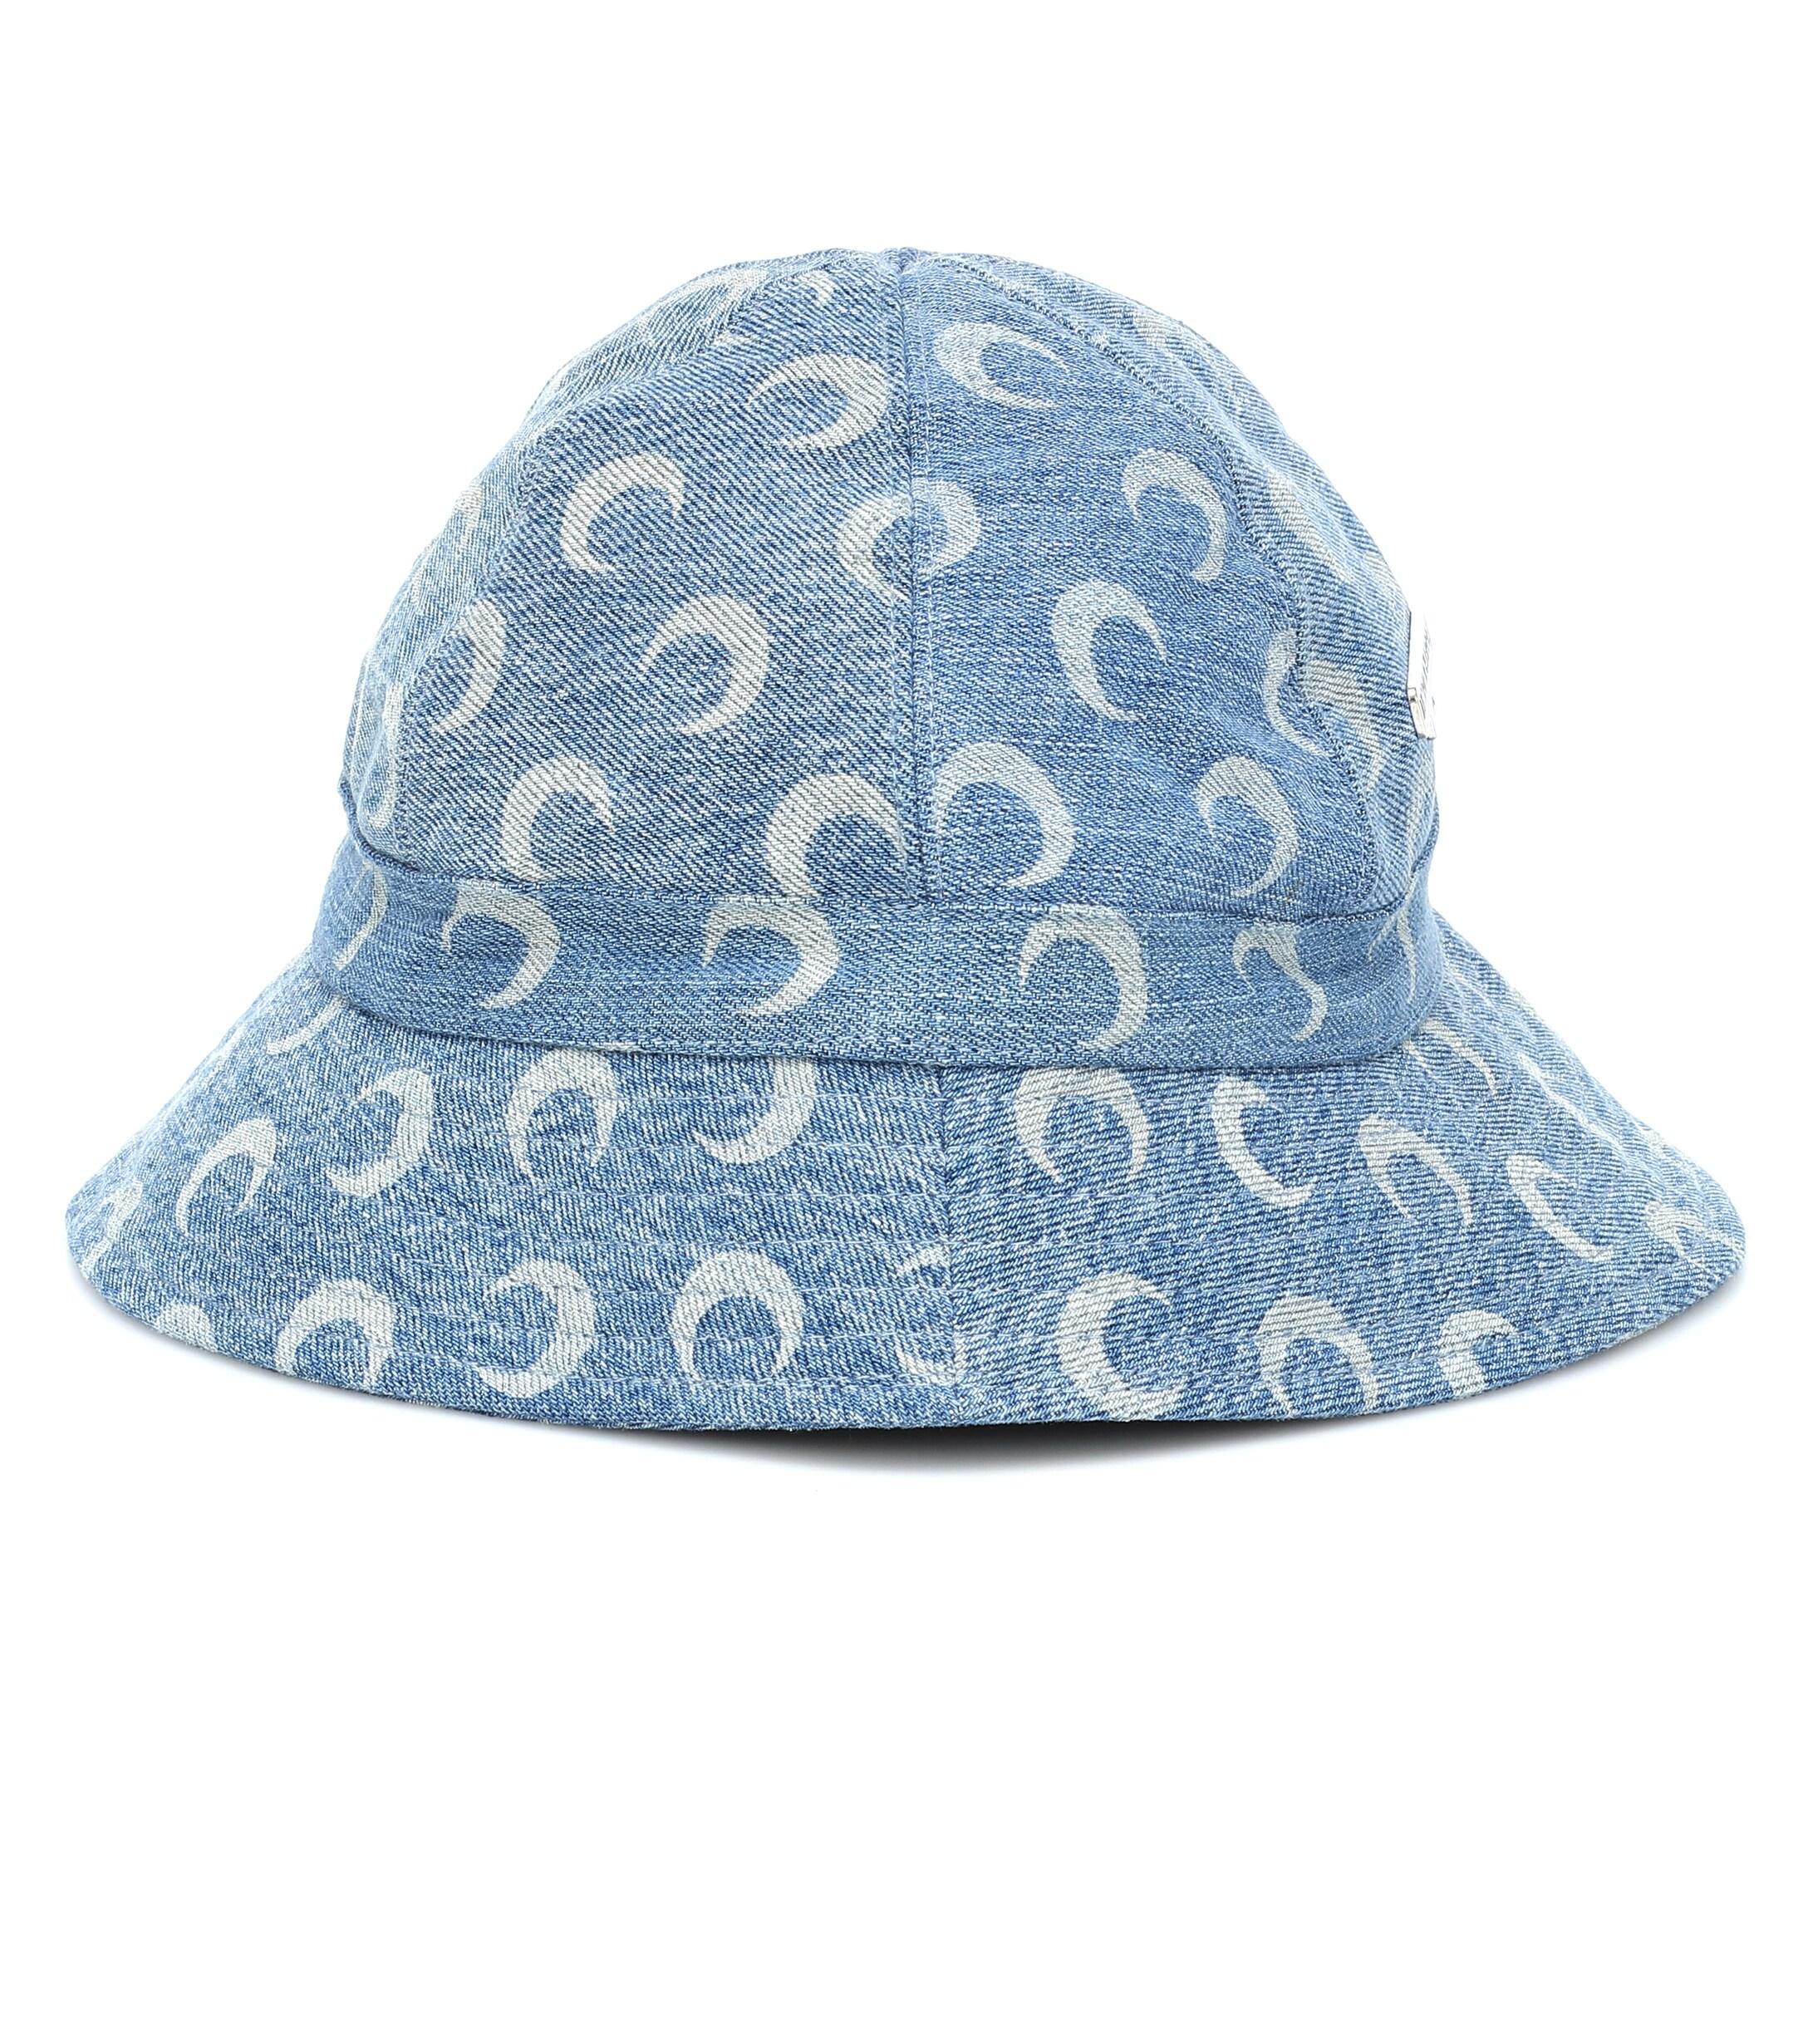 Marine Serre Logo Denim Bucket Hat in Blue - Lyst